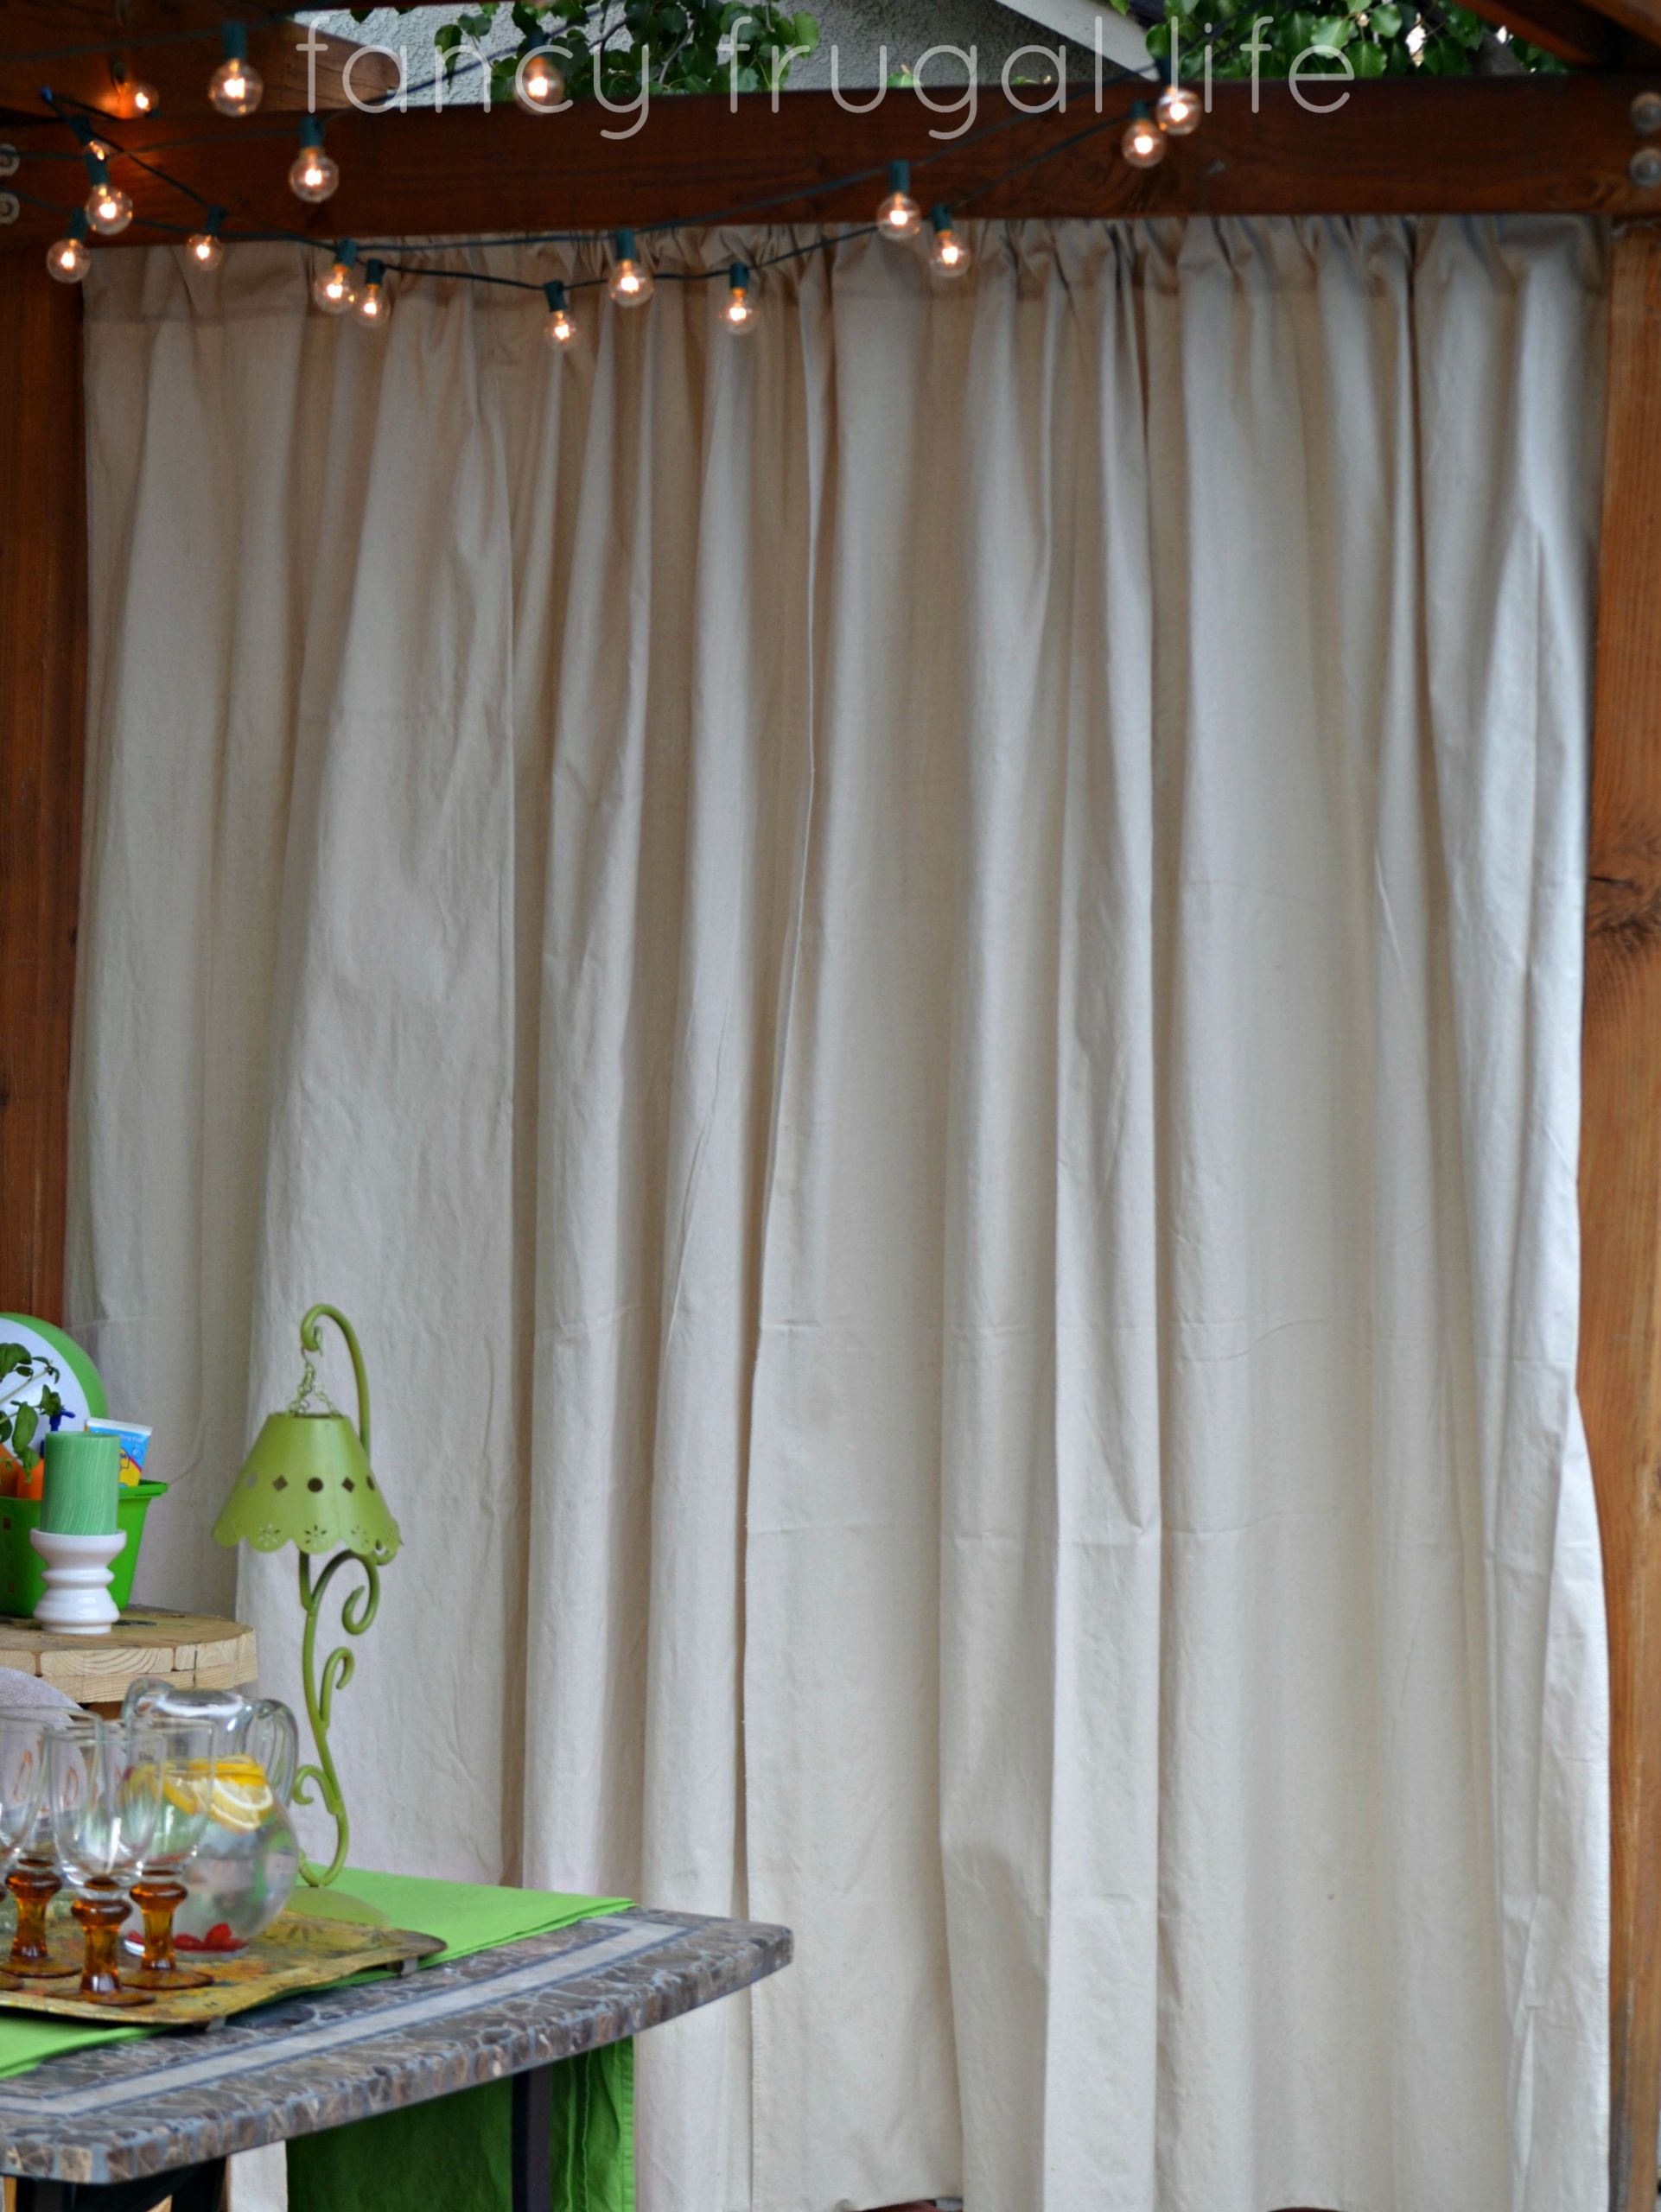 DIY Outdoor Curtains For Patio
 “Cabana” Patio Makeover with DIY Drop Cloth Curtains